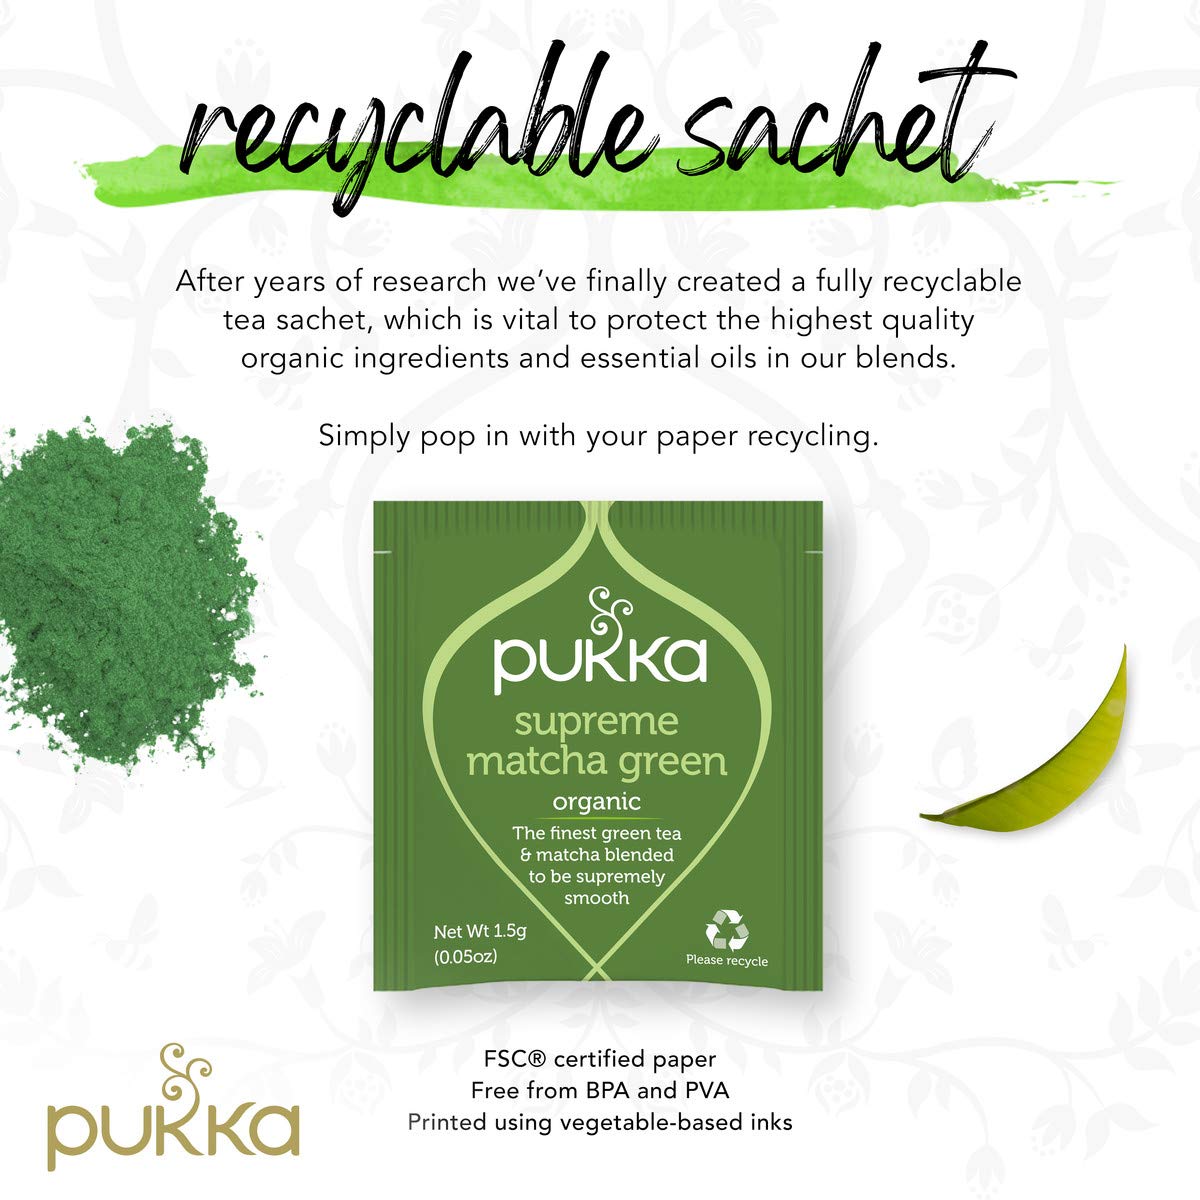 Pukka Organic Supreme Matcha Green 20 Bags